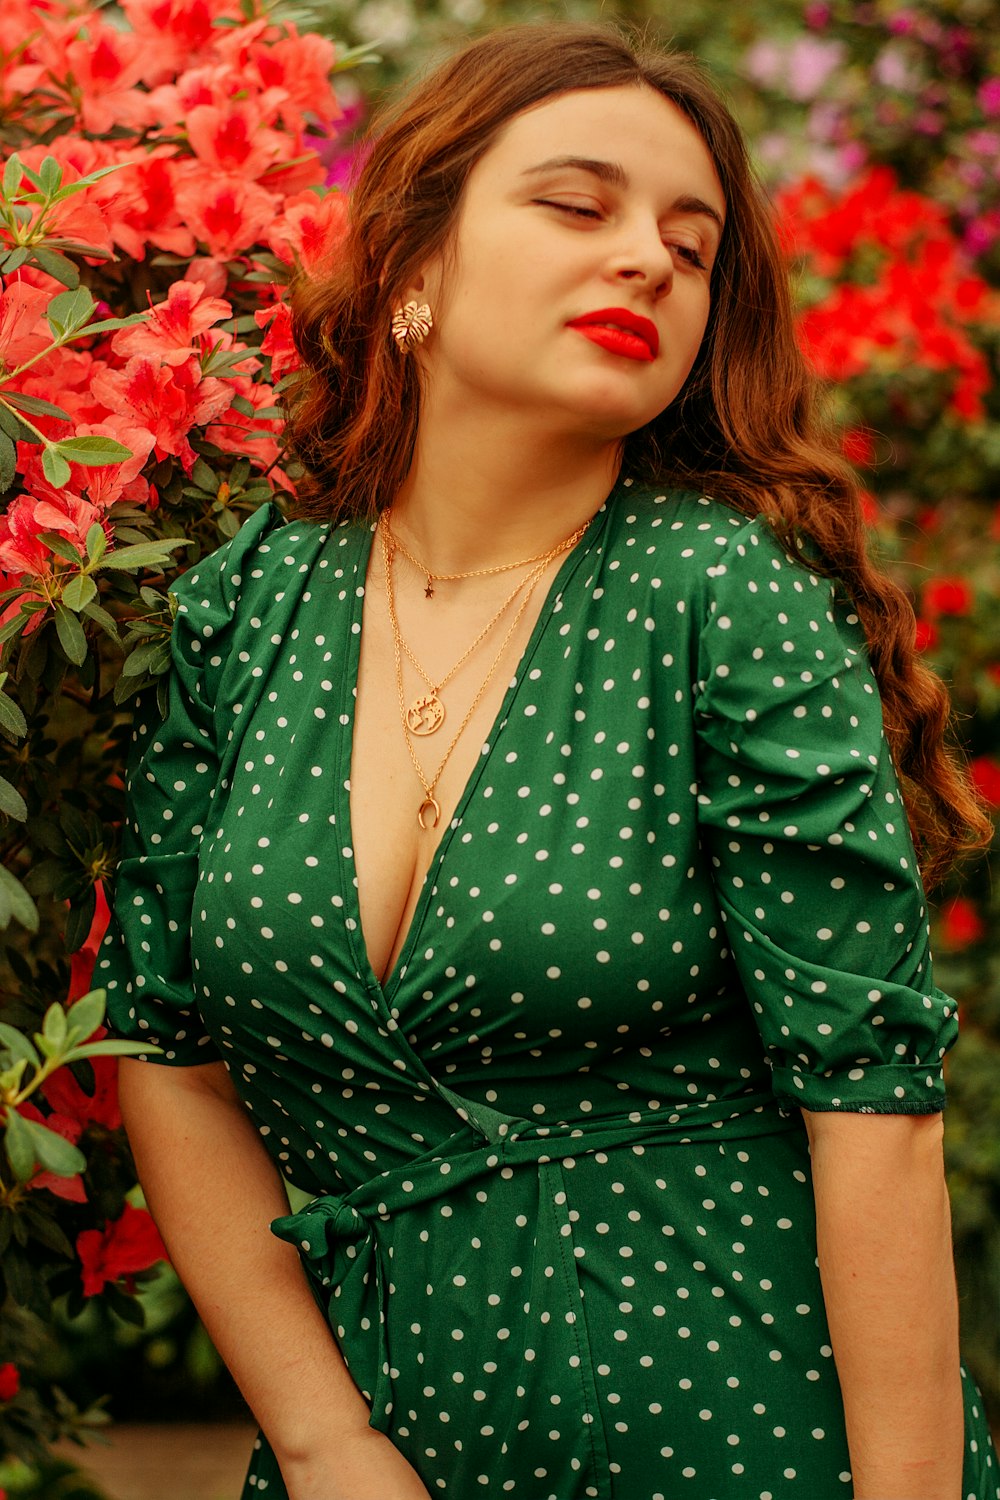 woman in green dress standing beside red flowers